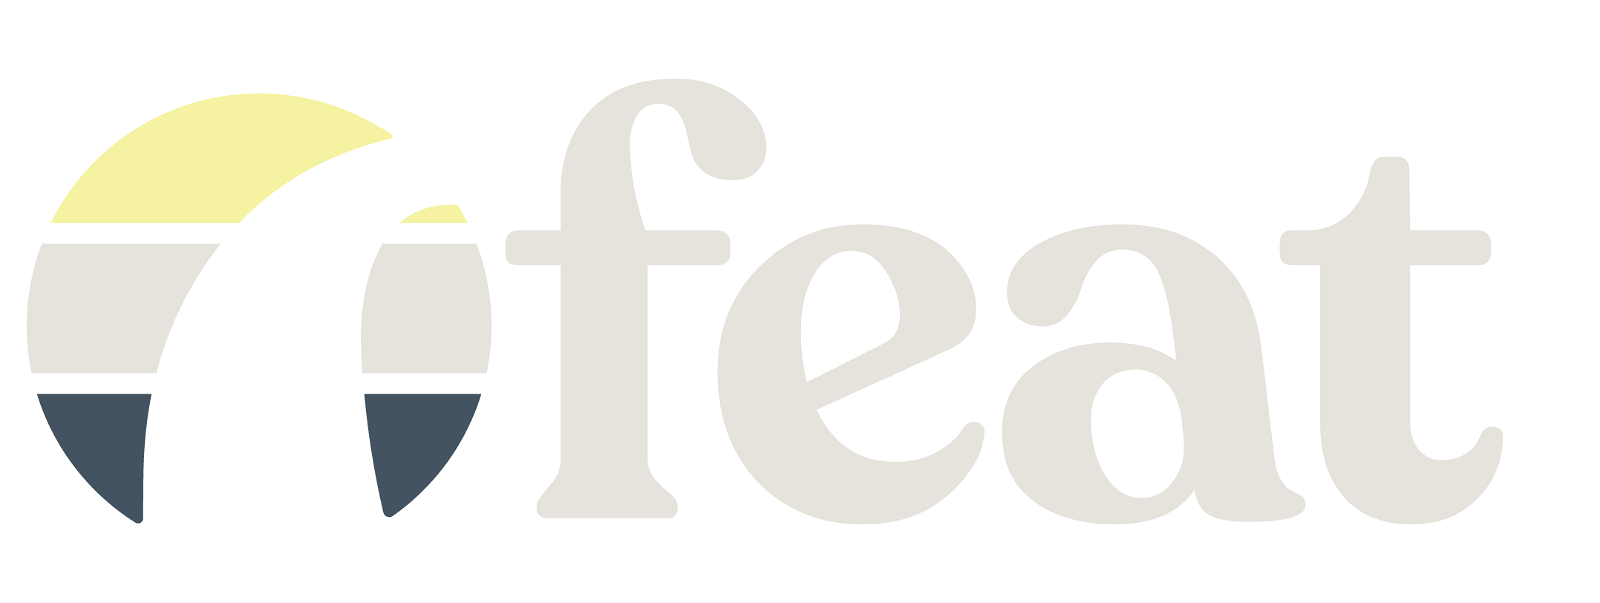 Feat logo